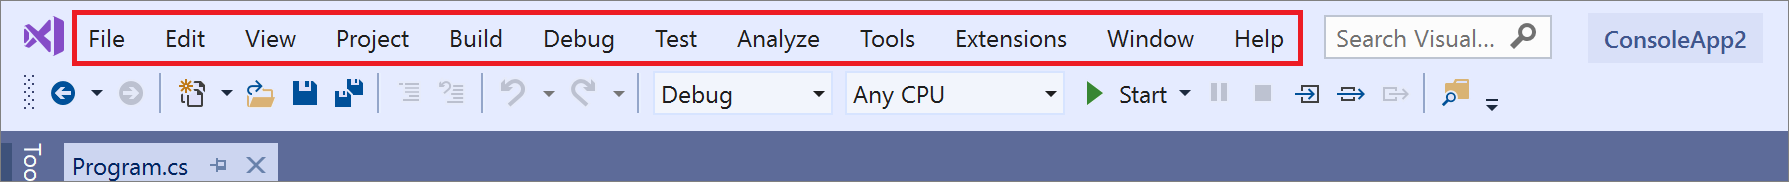 Screenshot showing the Menu bar in Visual Studio 2019.